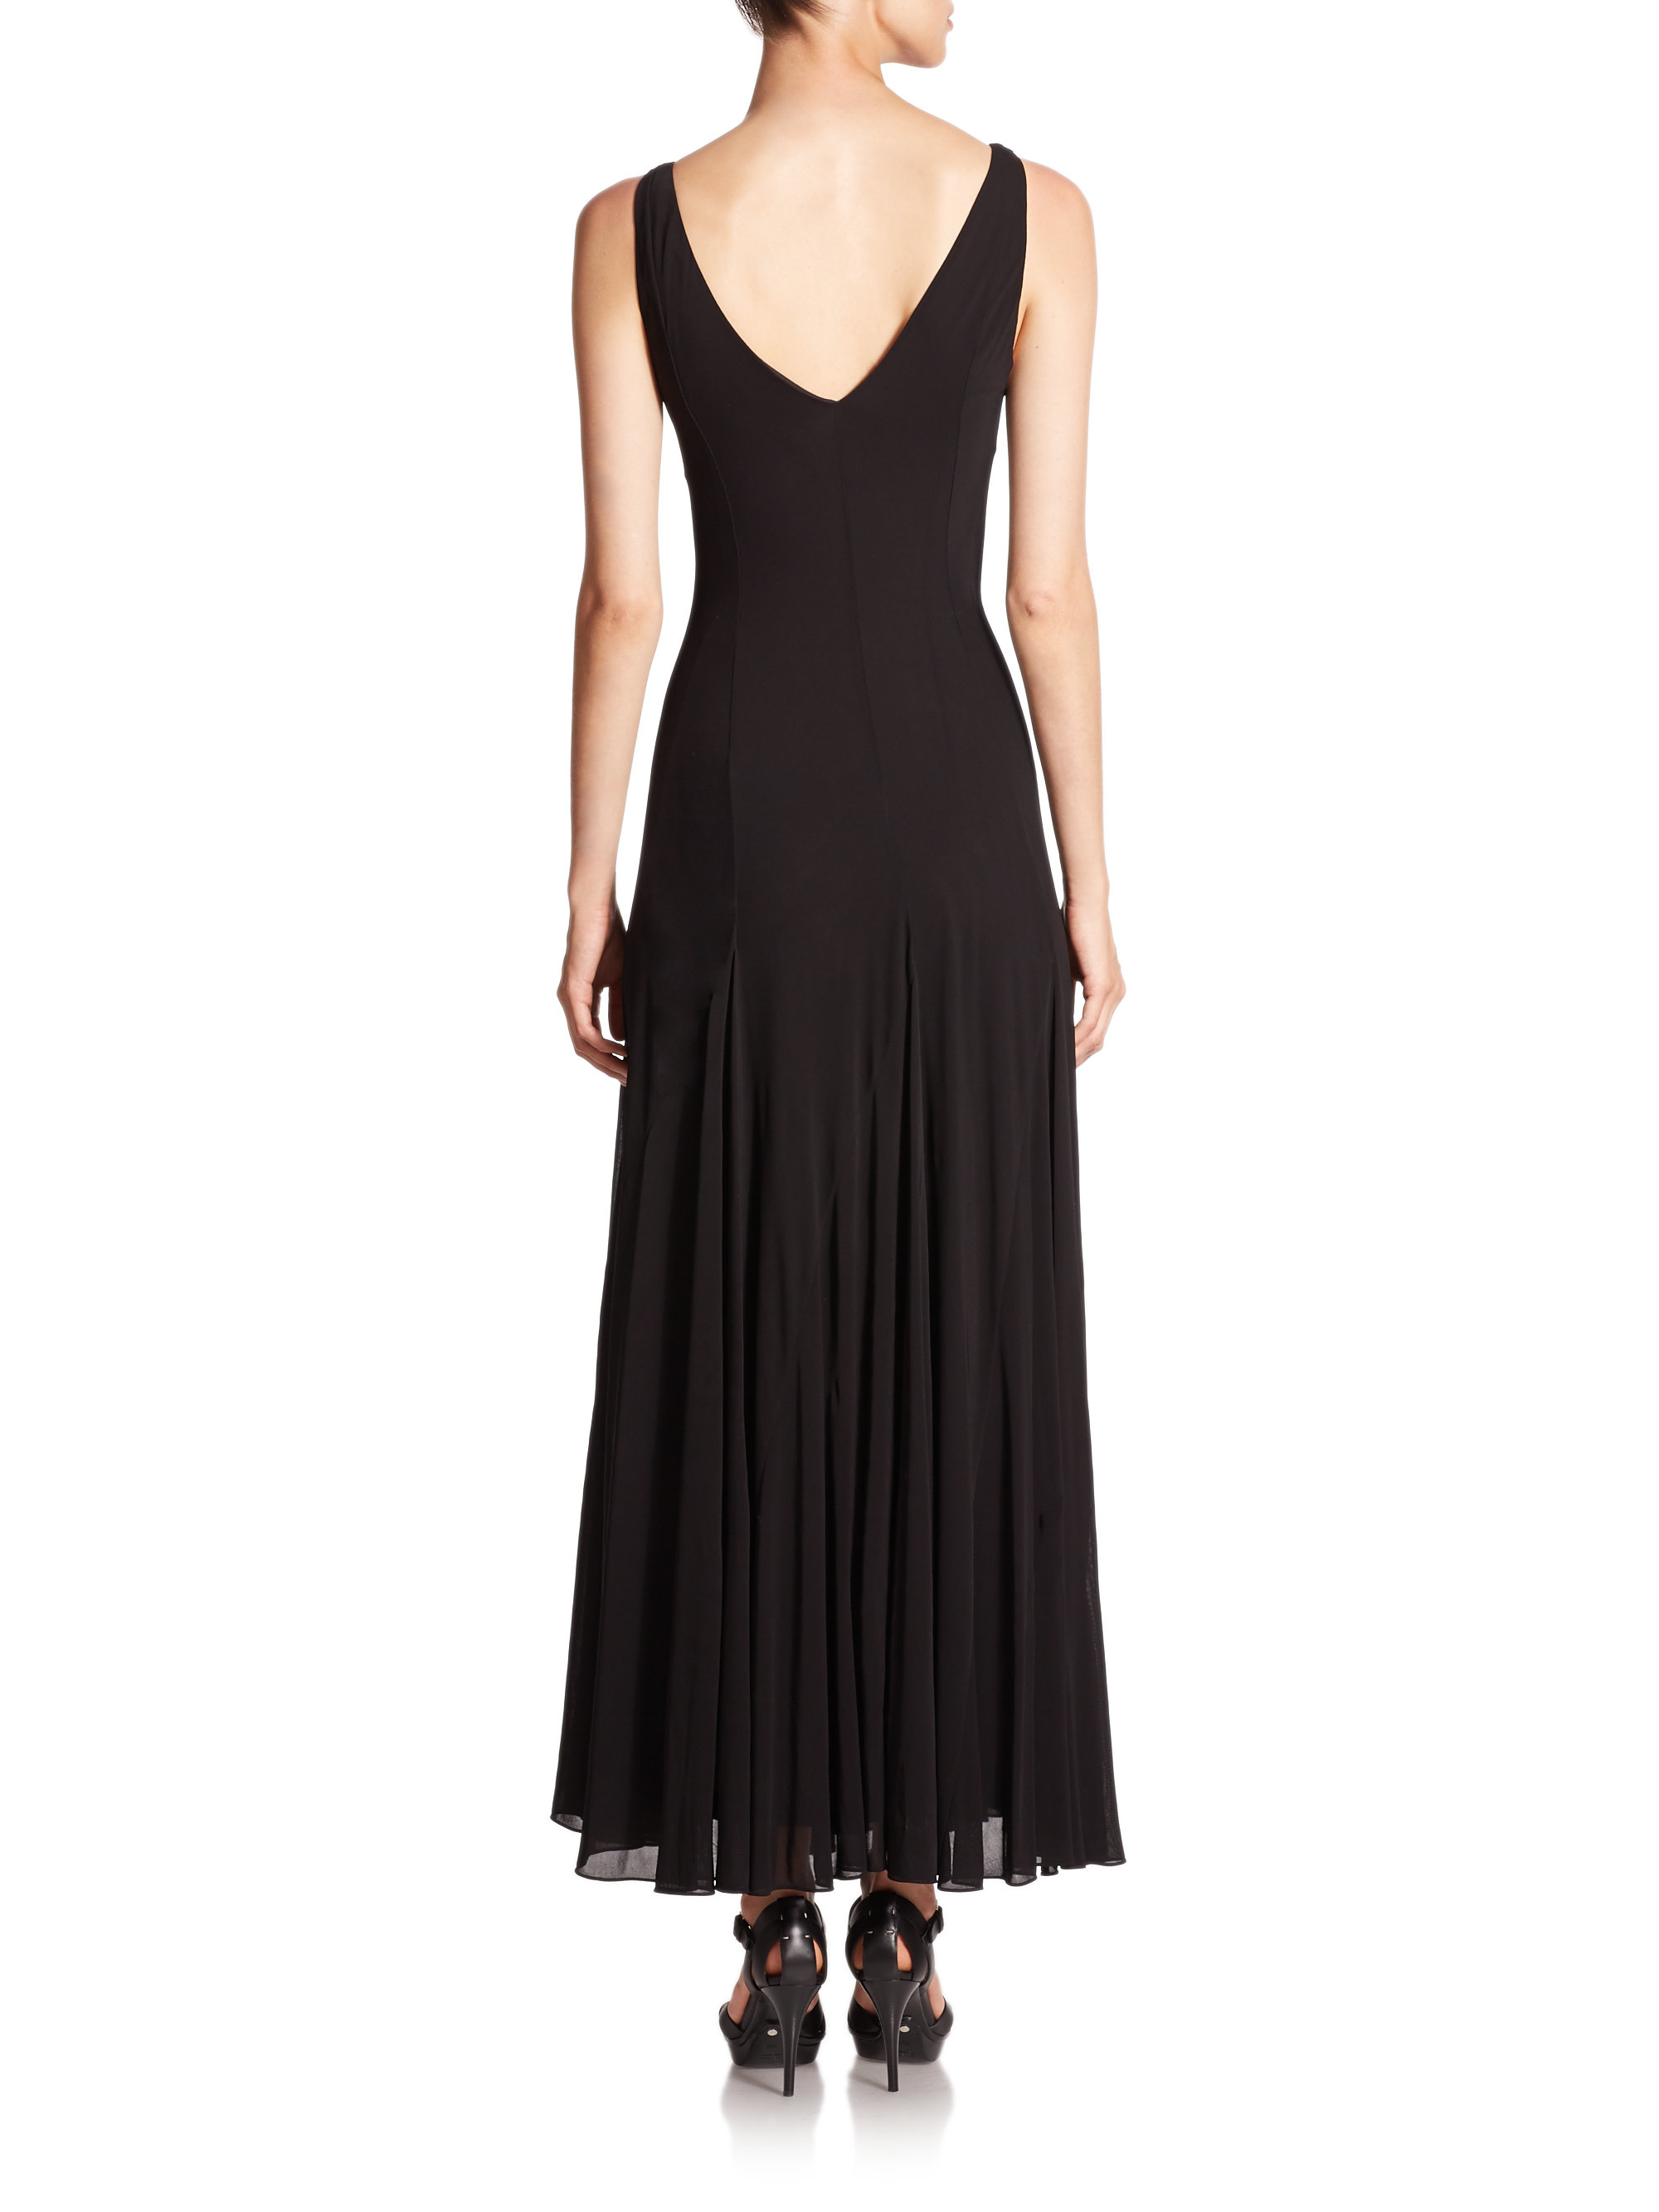 Lyst - Polo ralph lauren Jersey V-neck Maxi Dress in Black